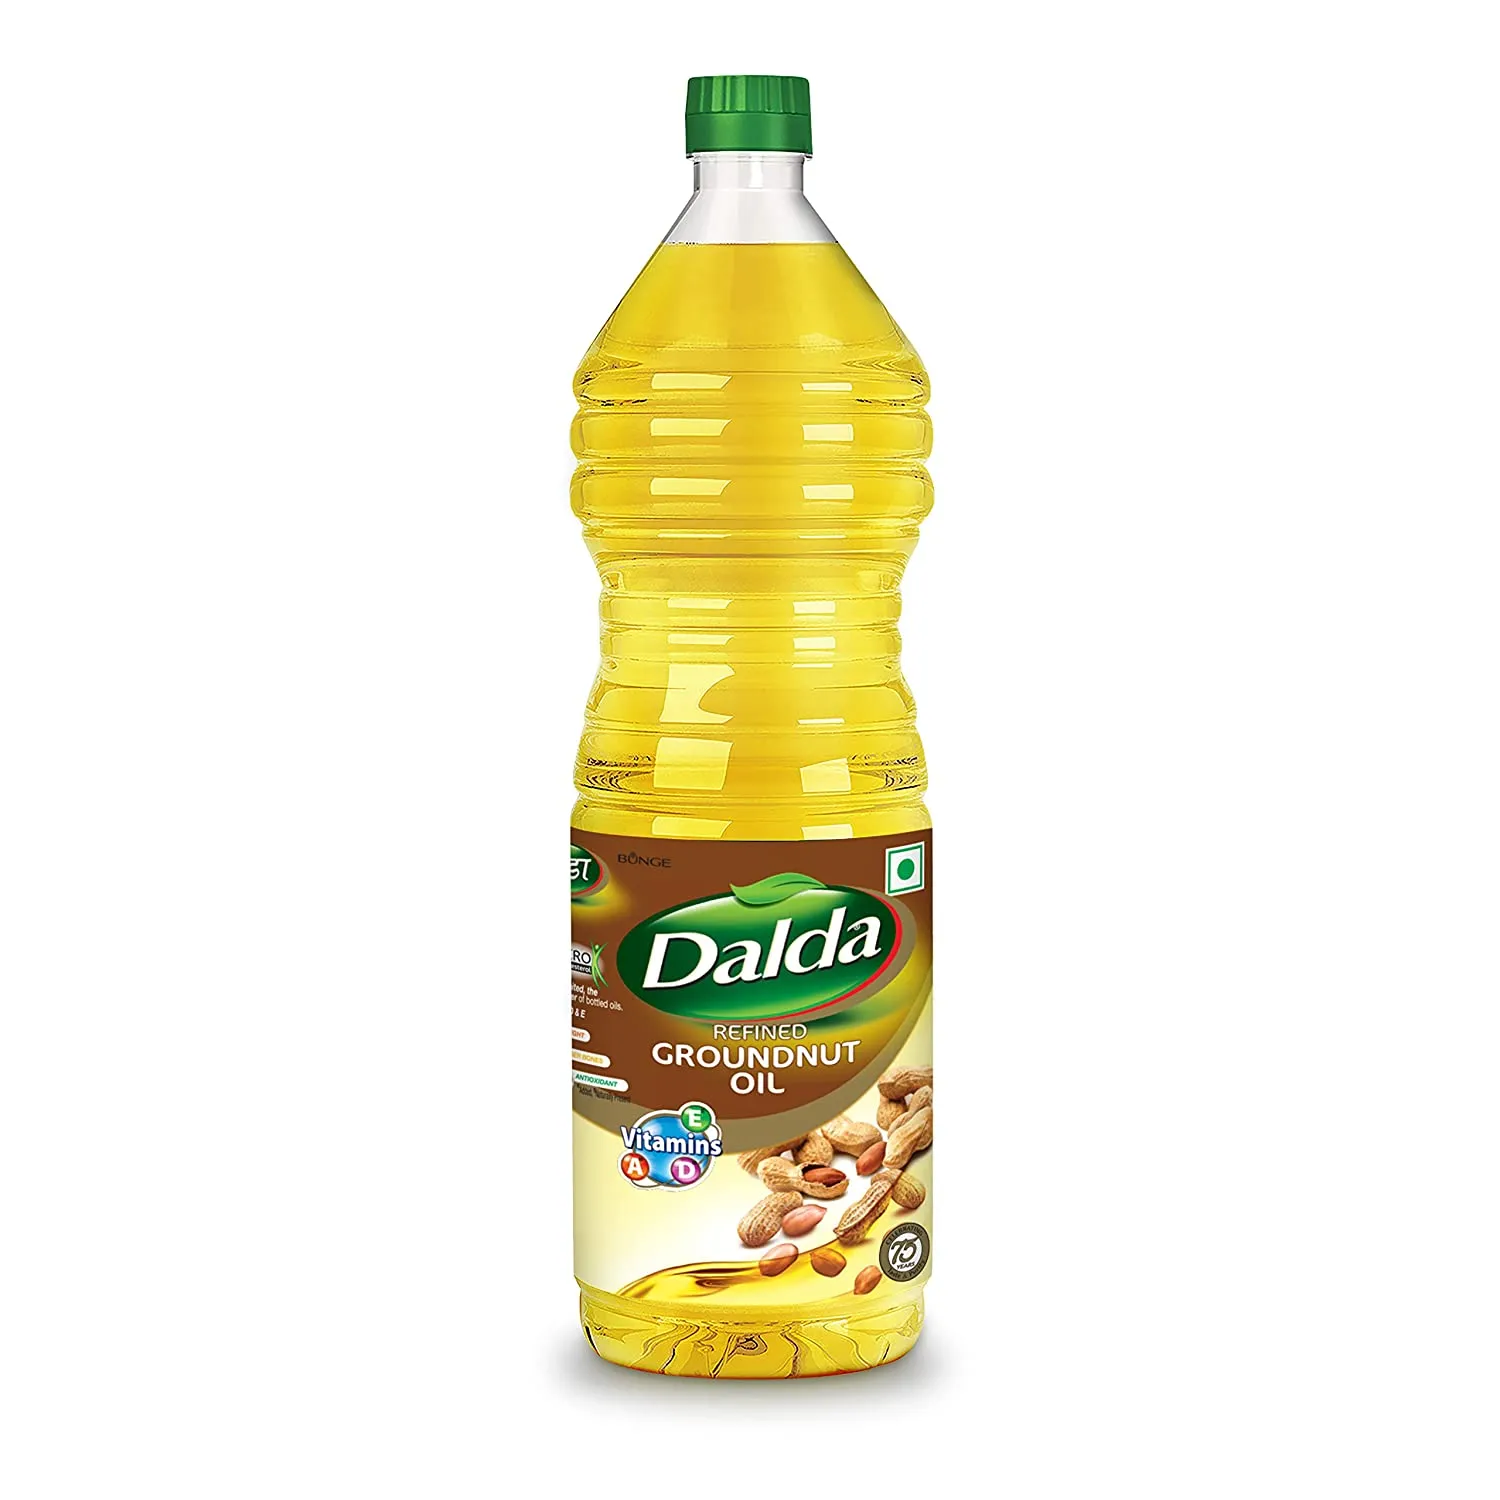 Dalda Refined Groundnut Oil 1 LT